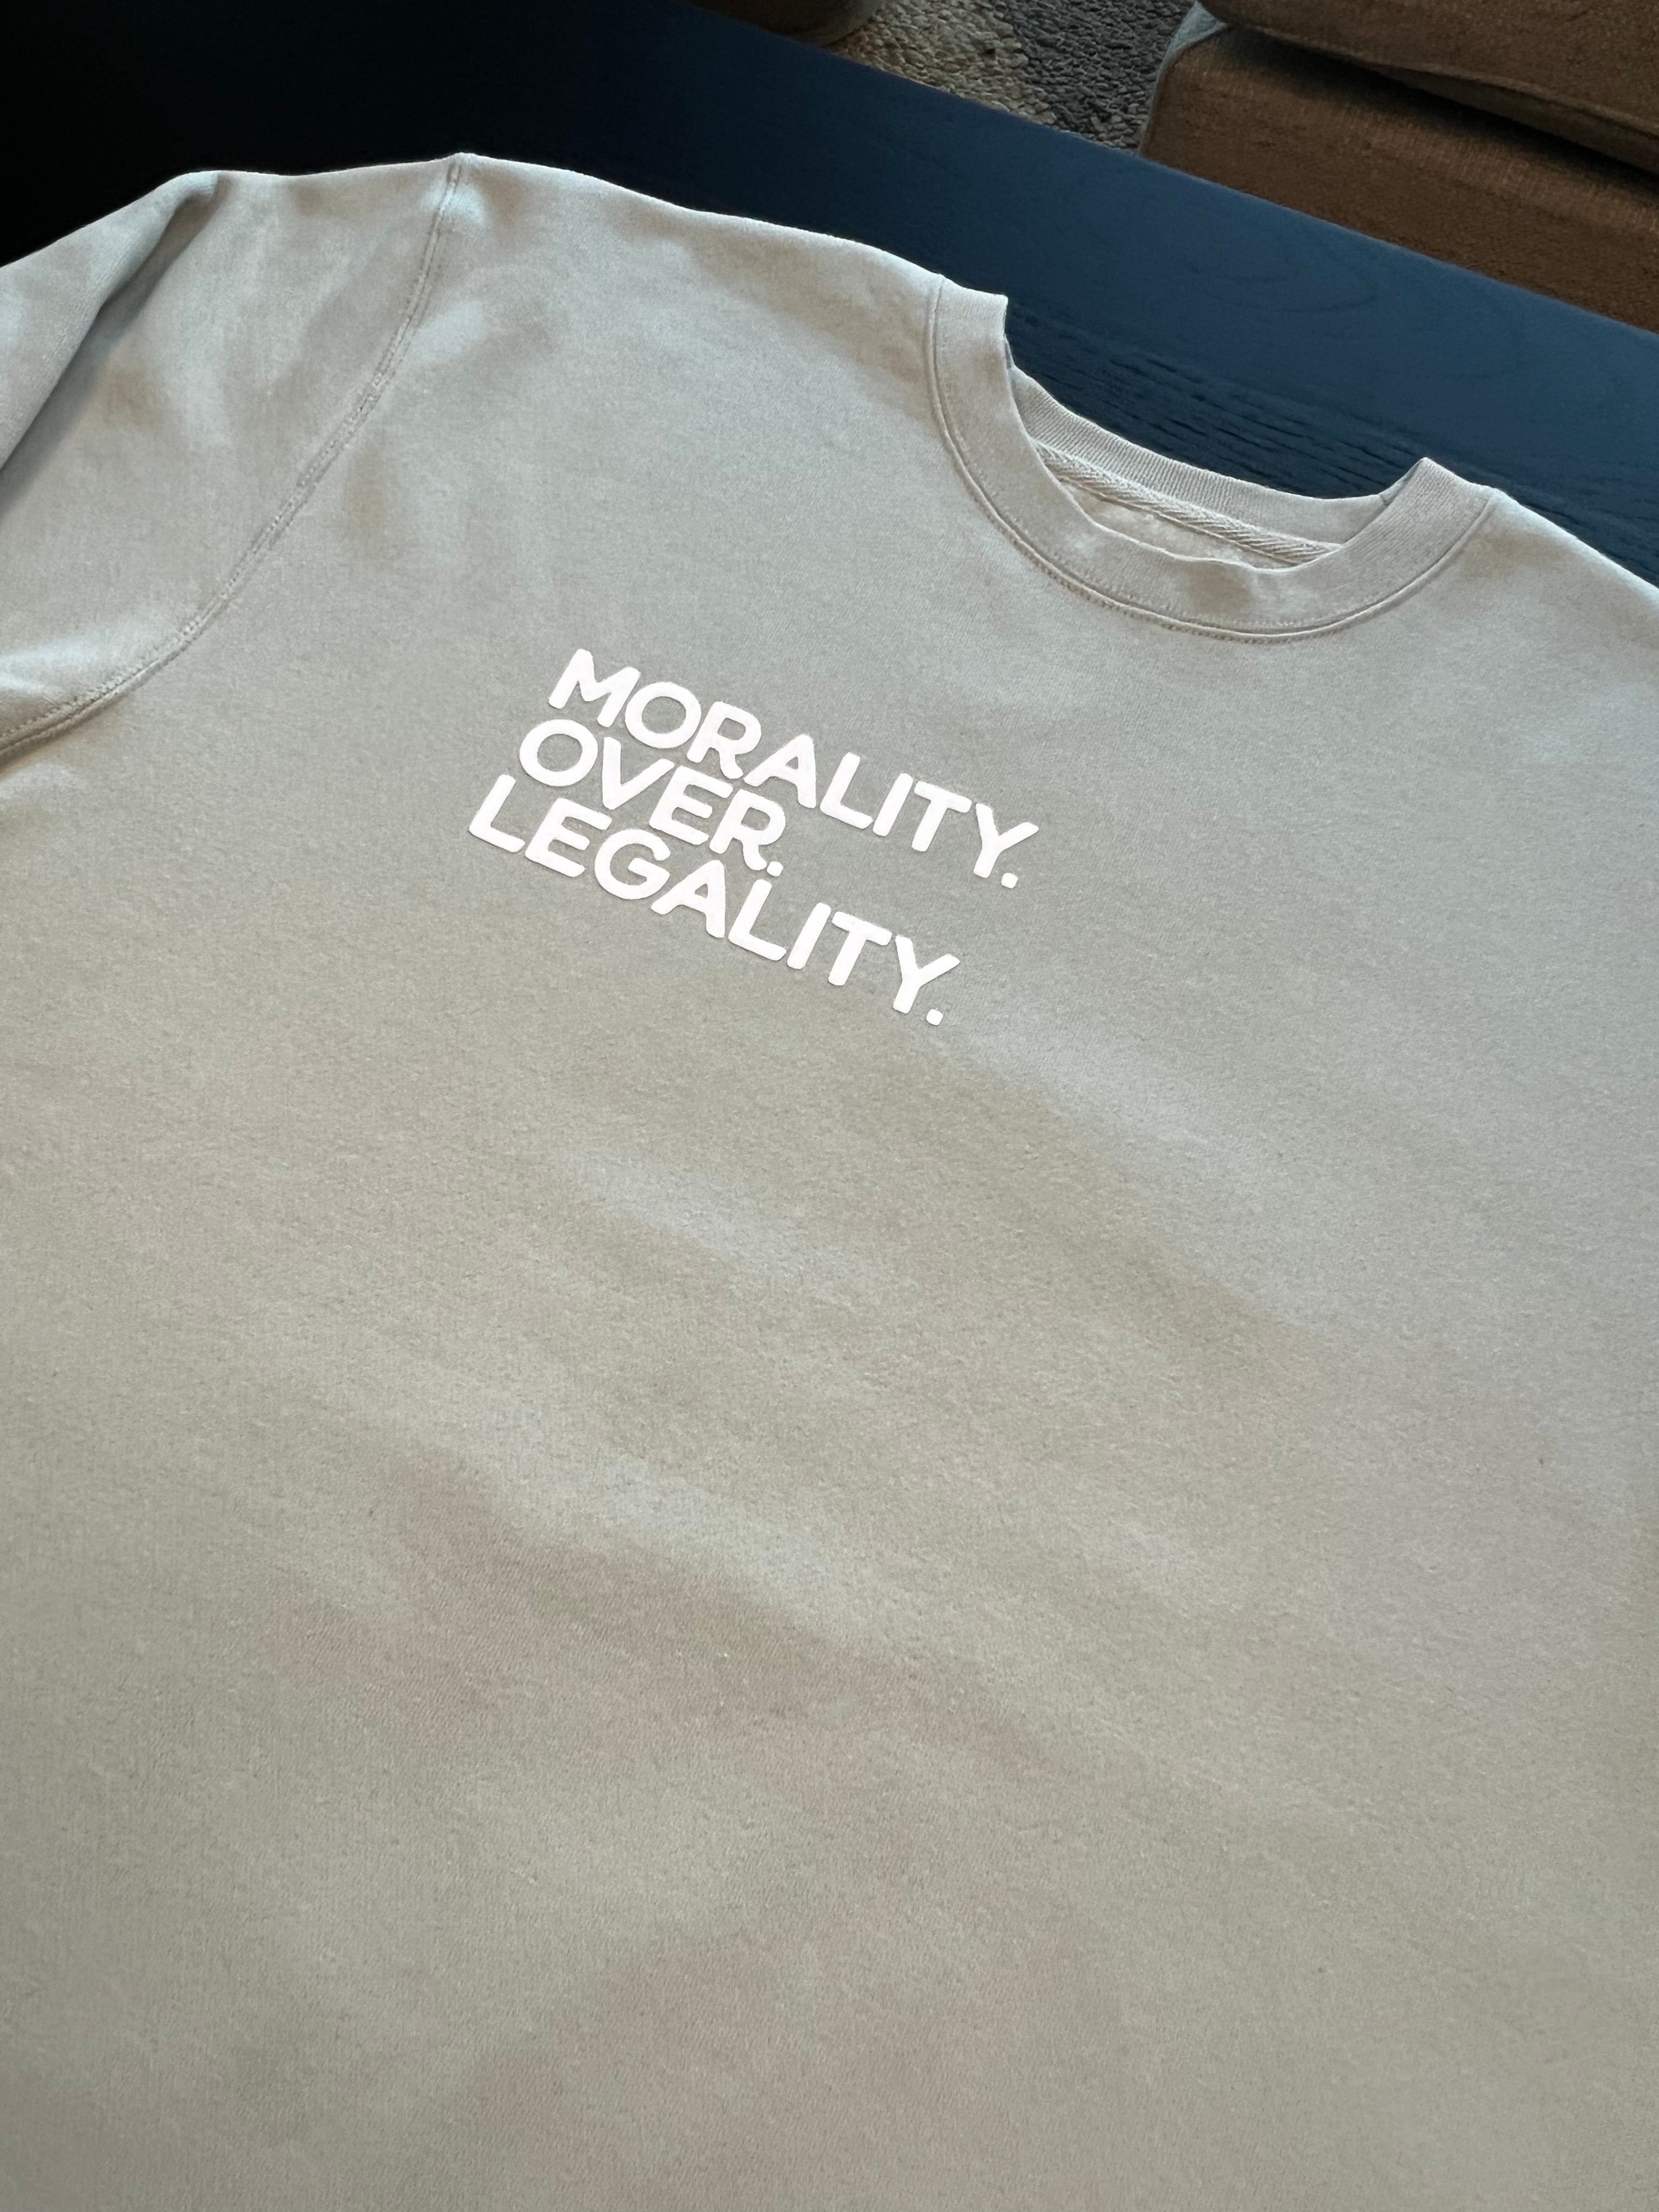 Morality Over Legality Crewneck Sweatshirt: Sage